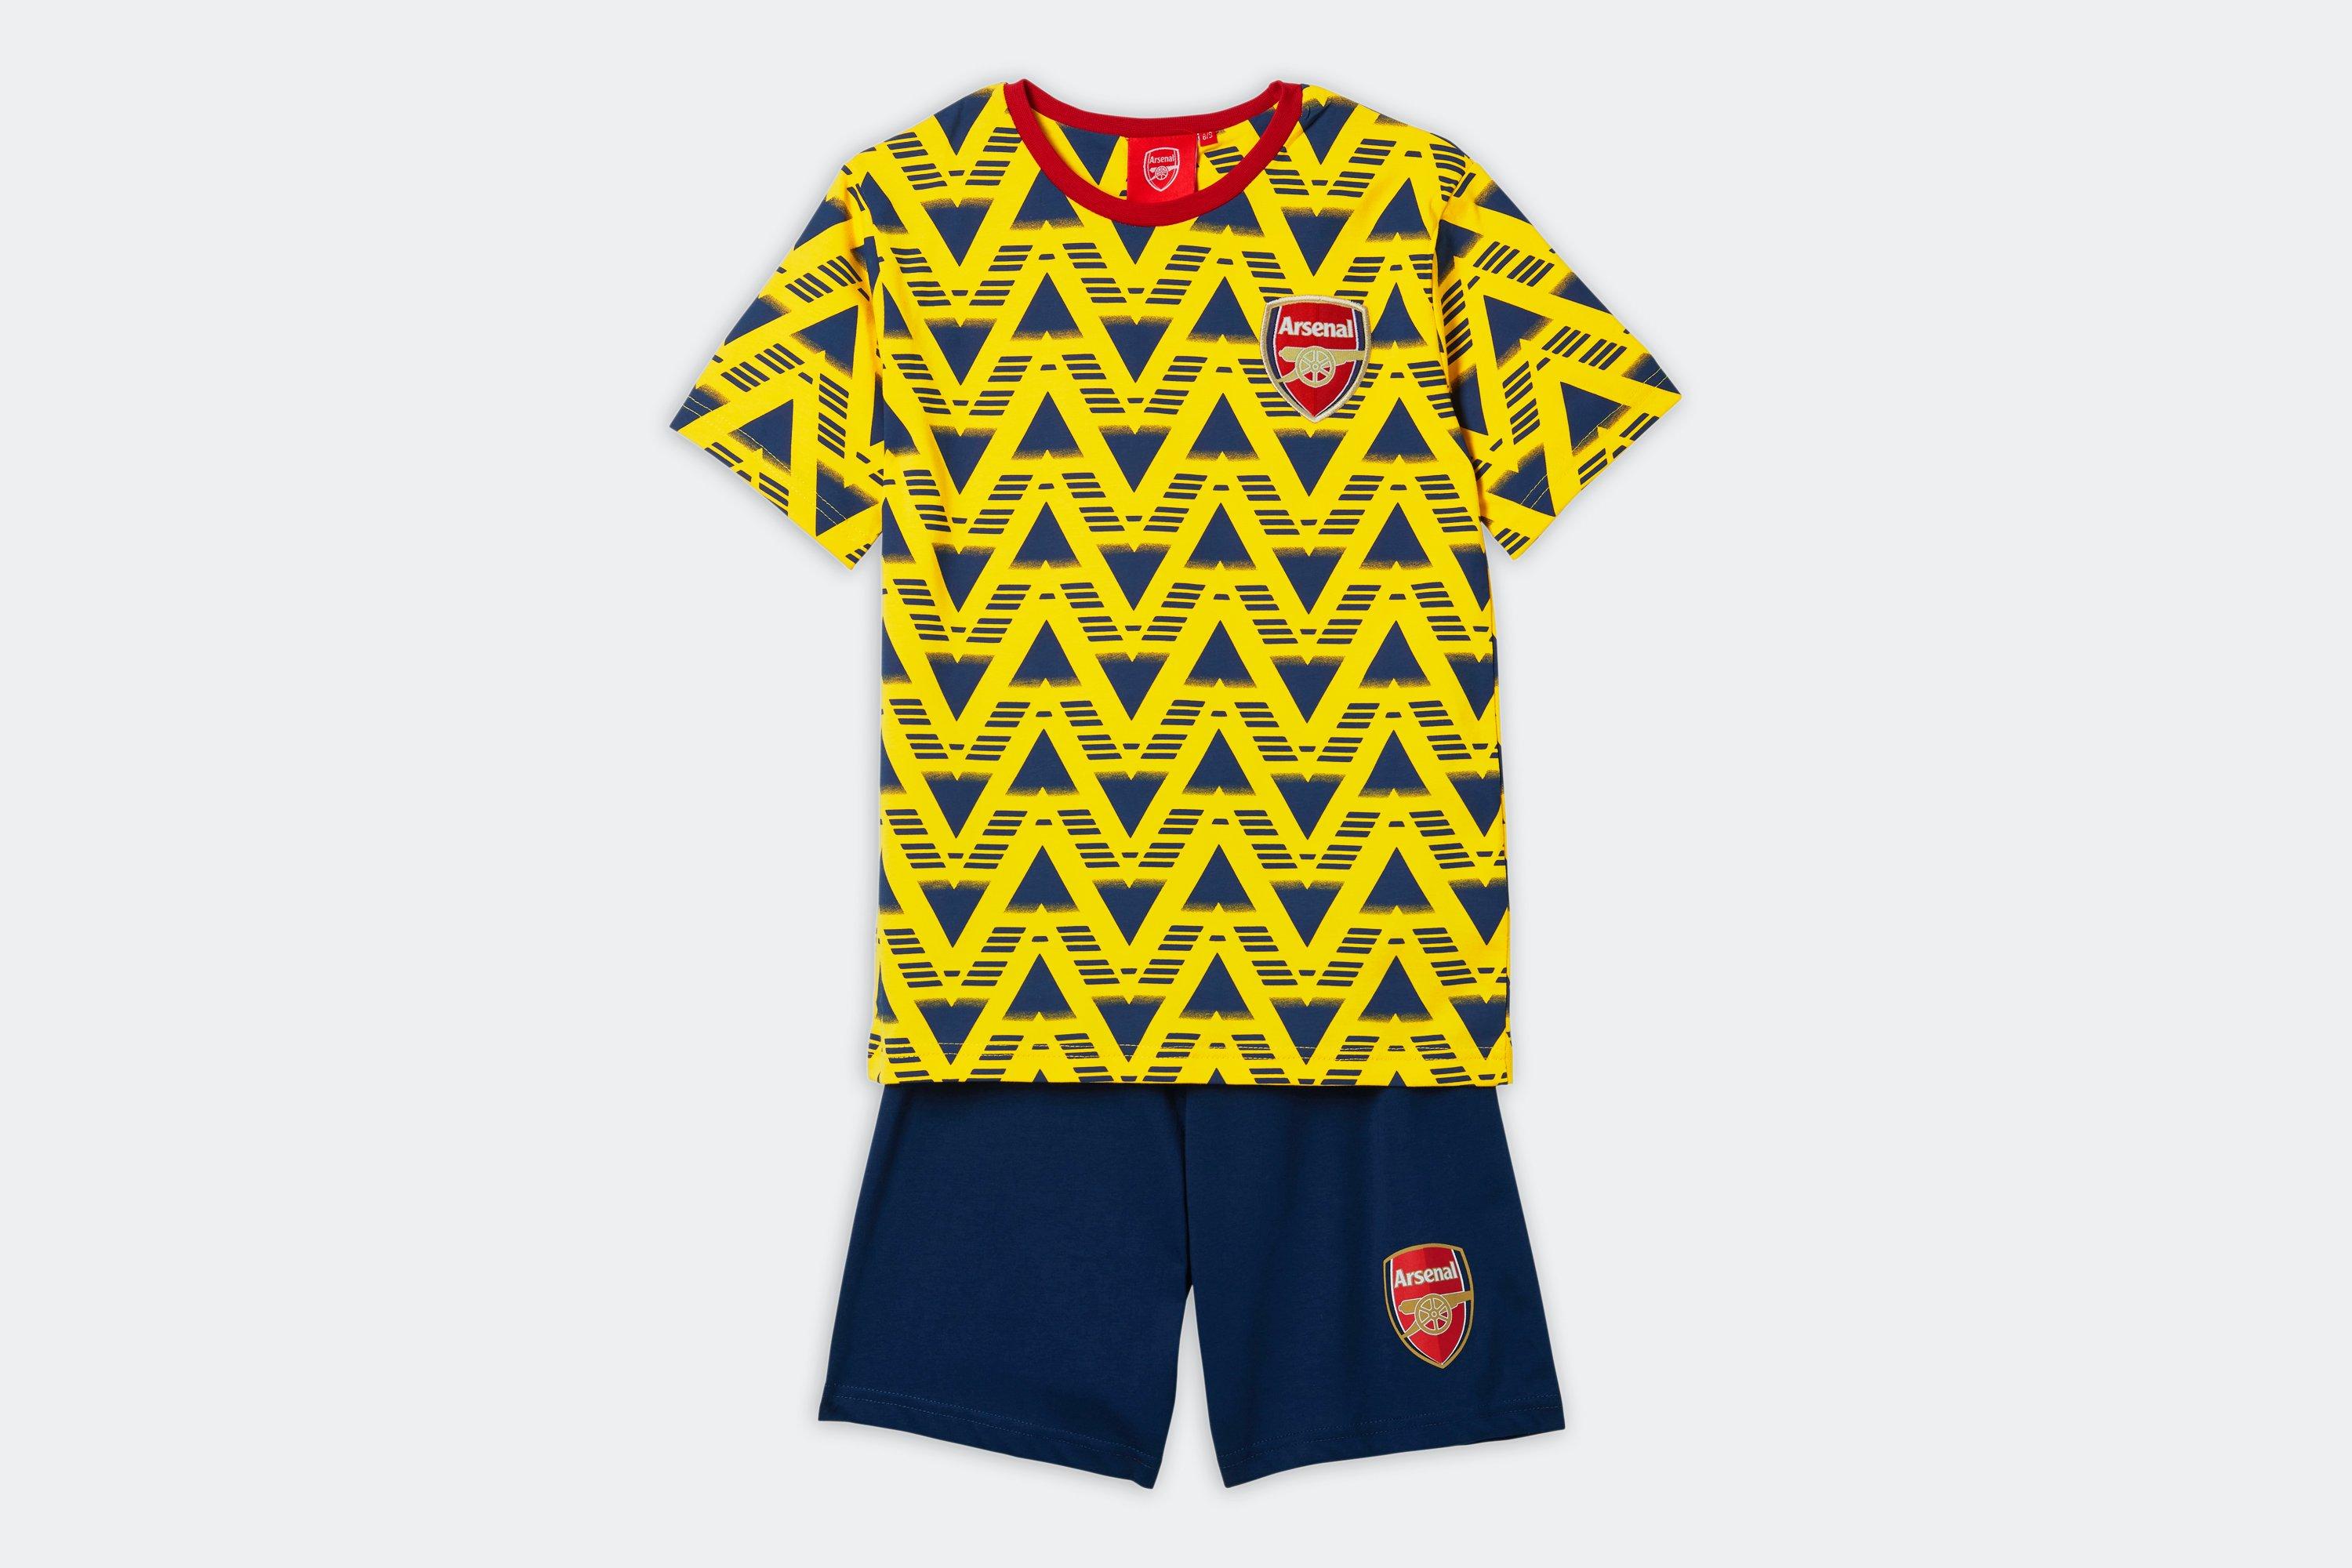 adidas x Arsenal Bruised Banana range